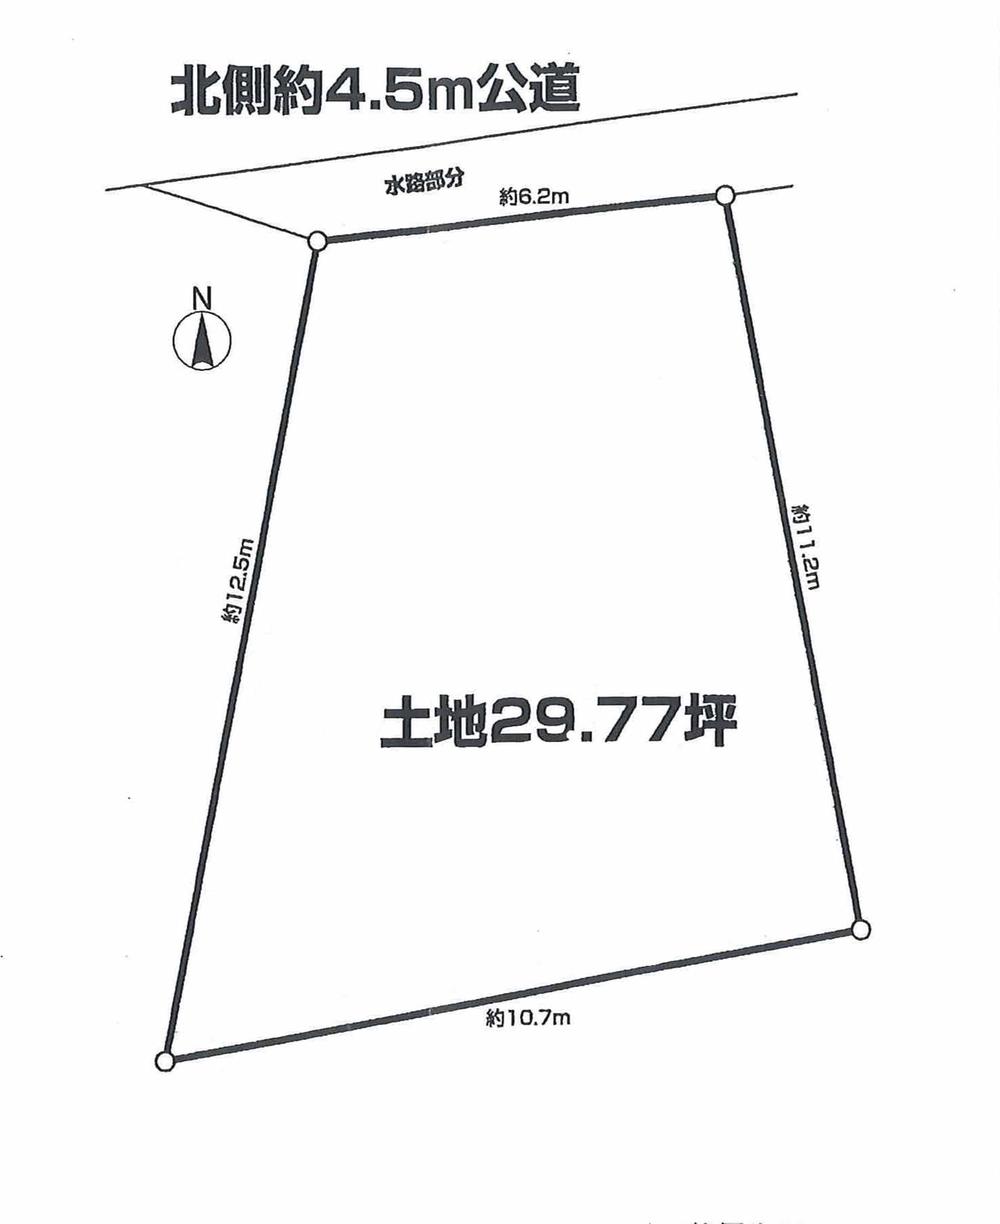 Compartment figure. Land price 7.9 million yen, Land area 98.44 sq m